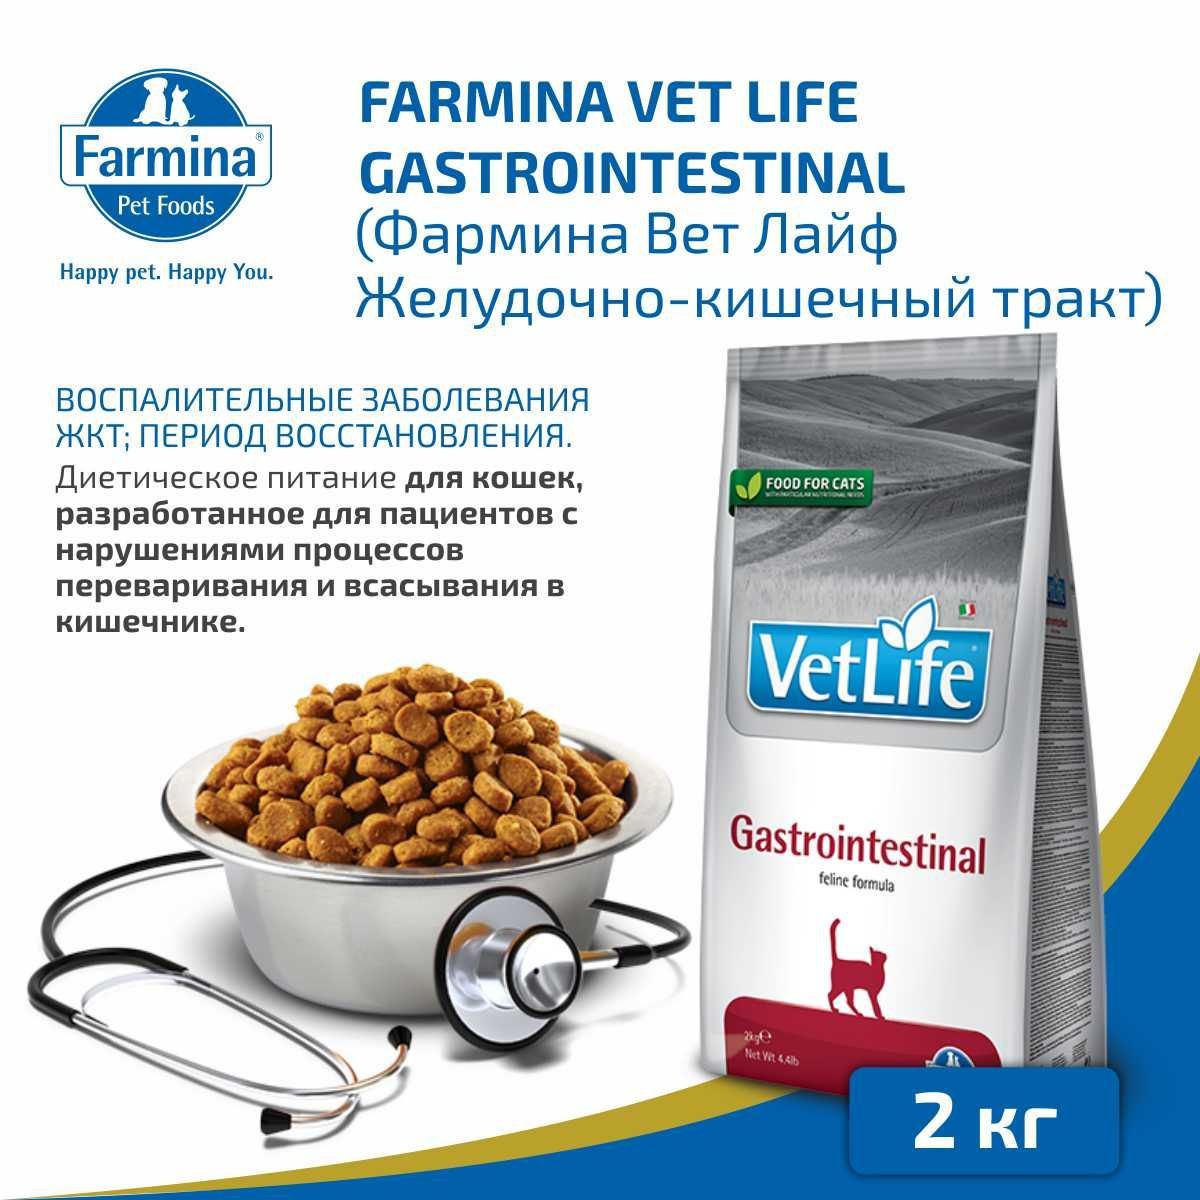 Farmina vet life отзывы